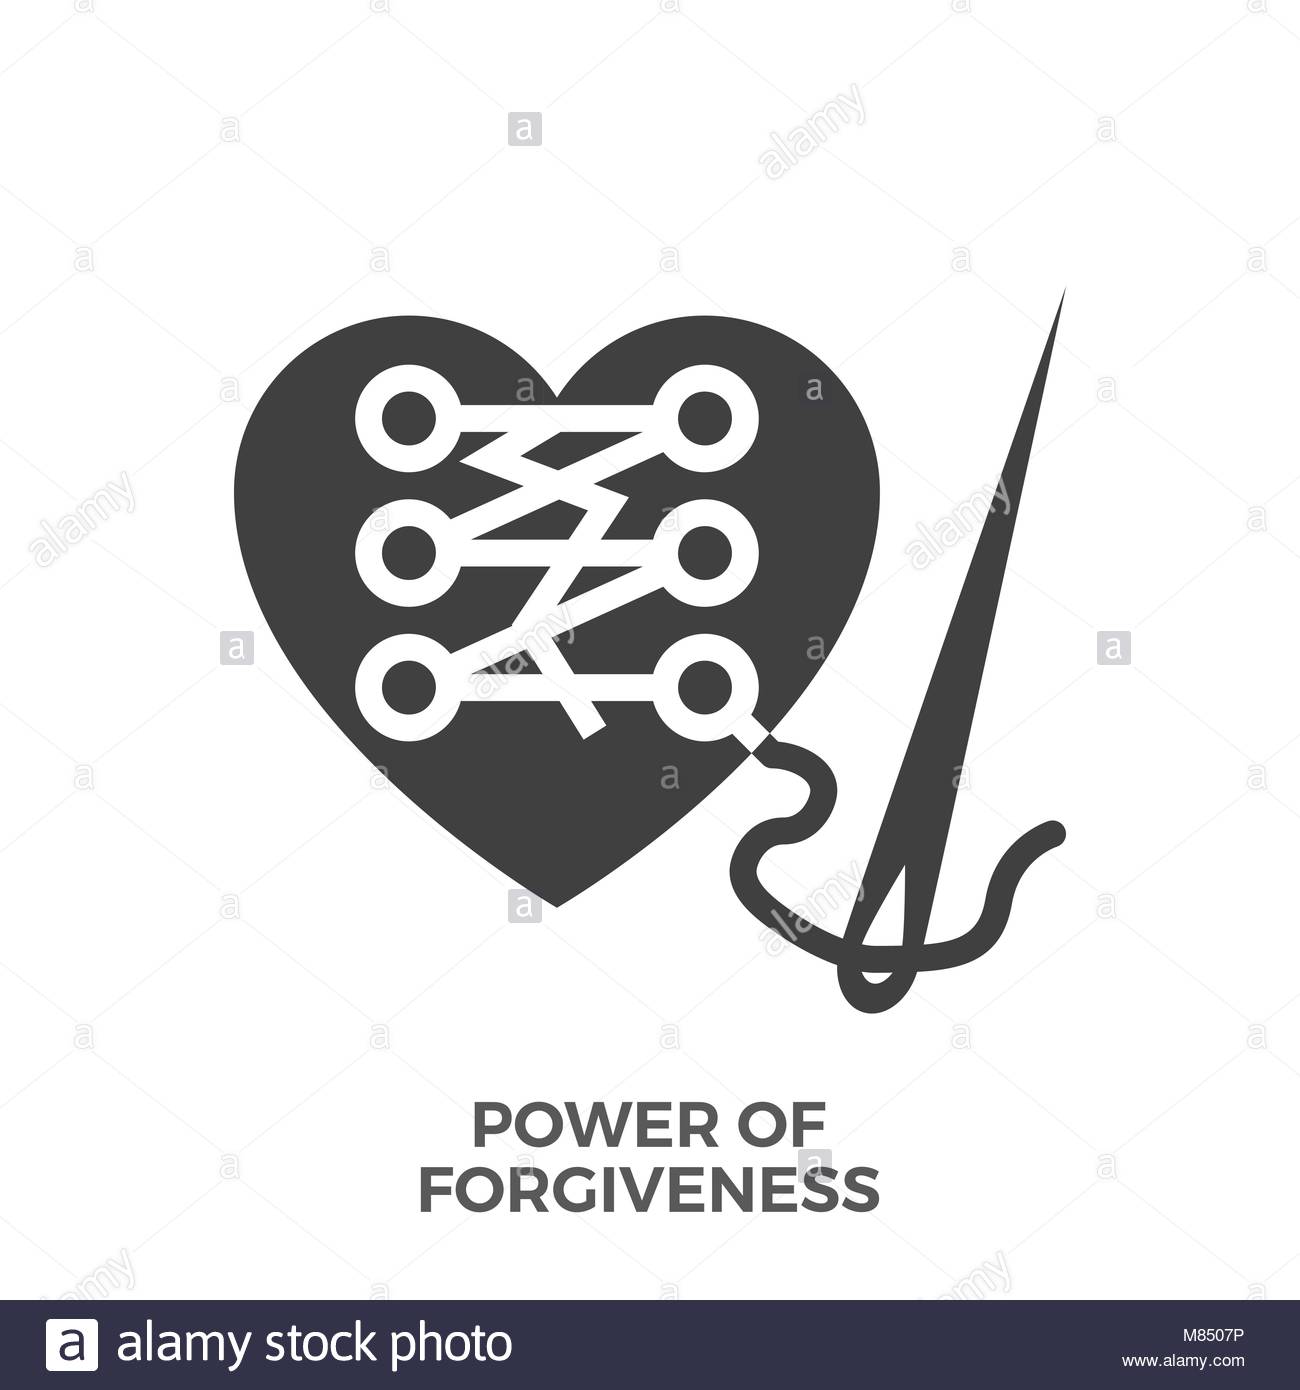 Forgiveness icons | Noun Project